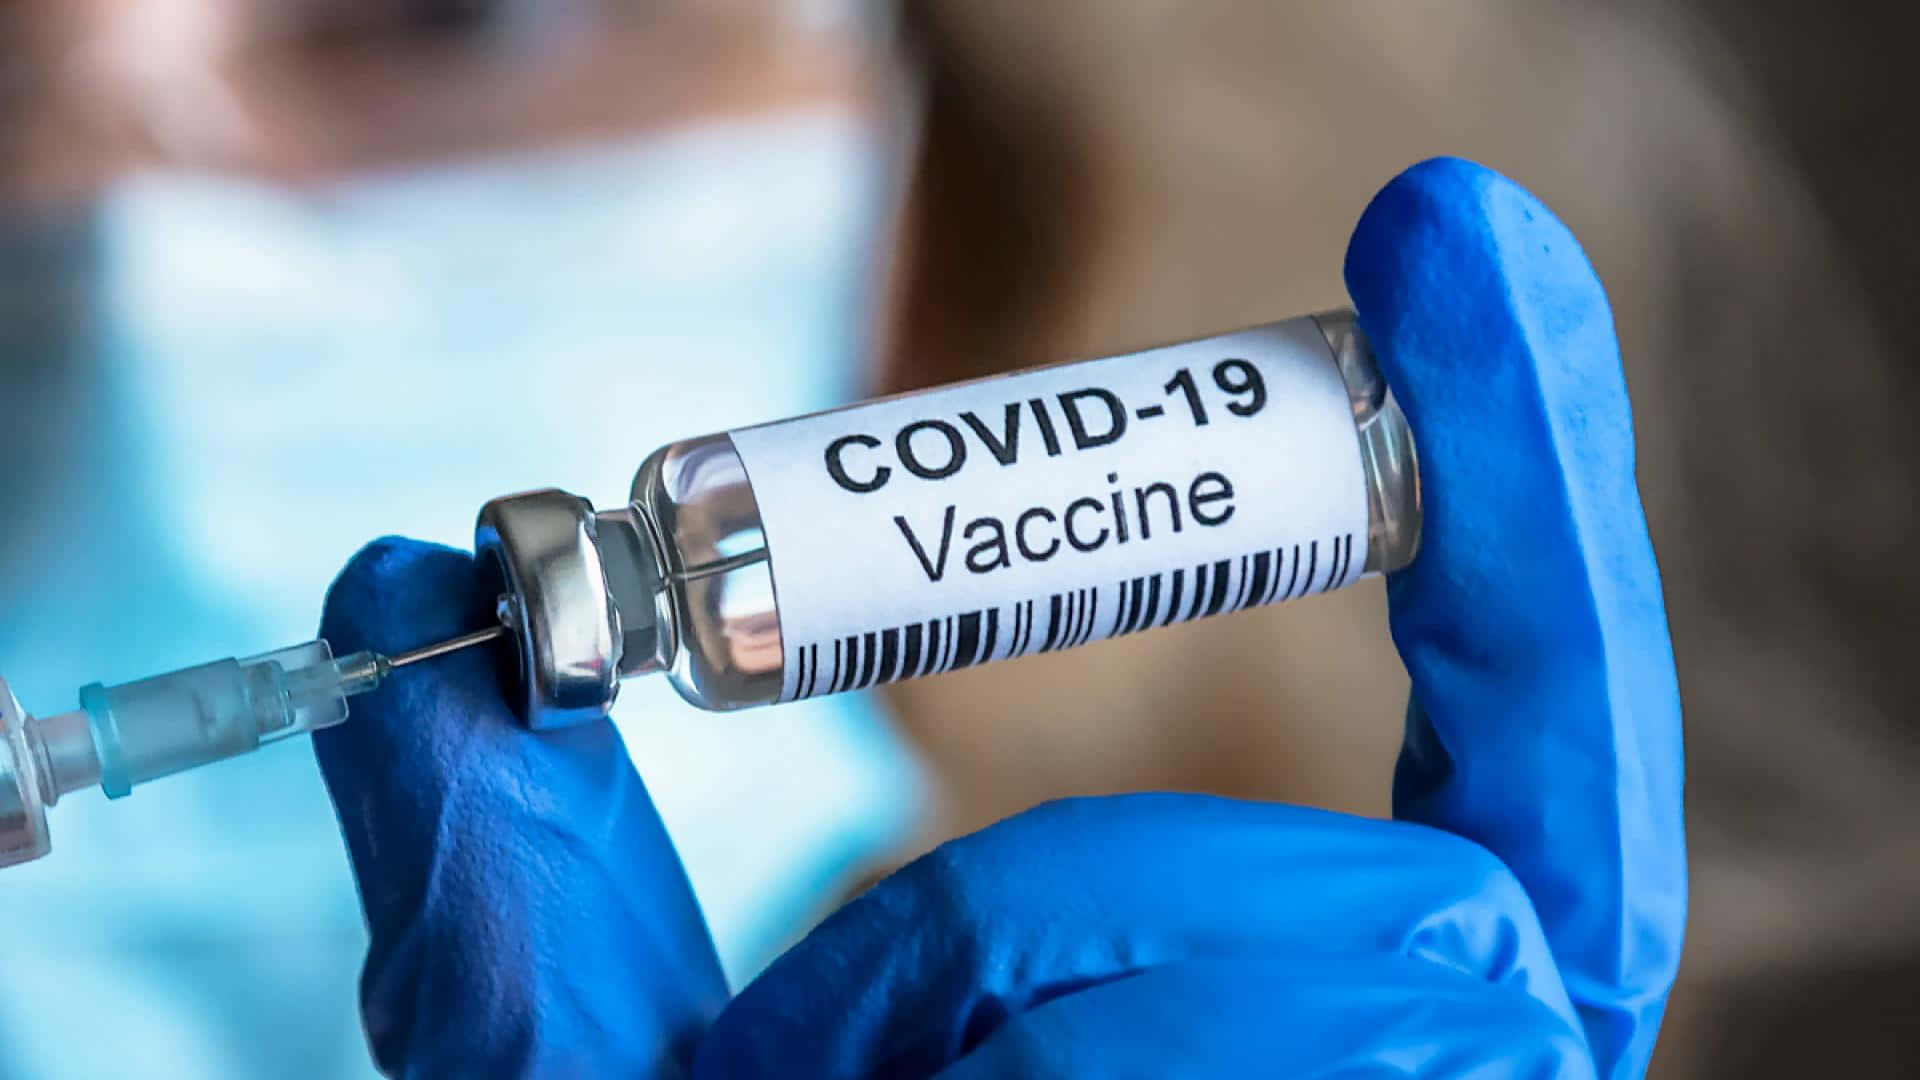 Médicasegurando A Vacina Contra A Covid-19. Papel de Parede